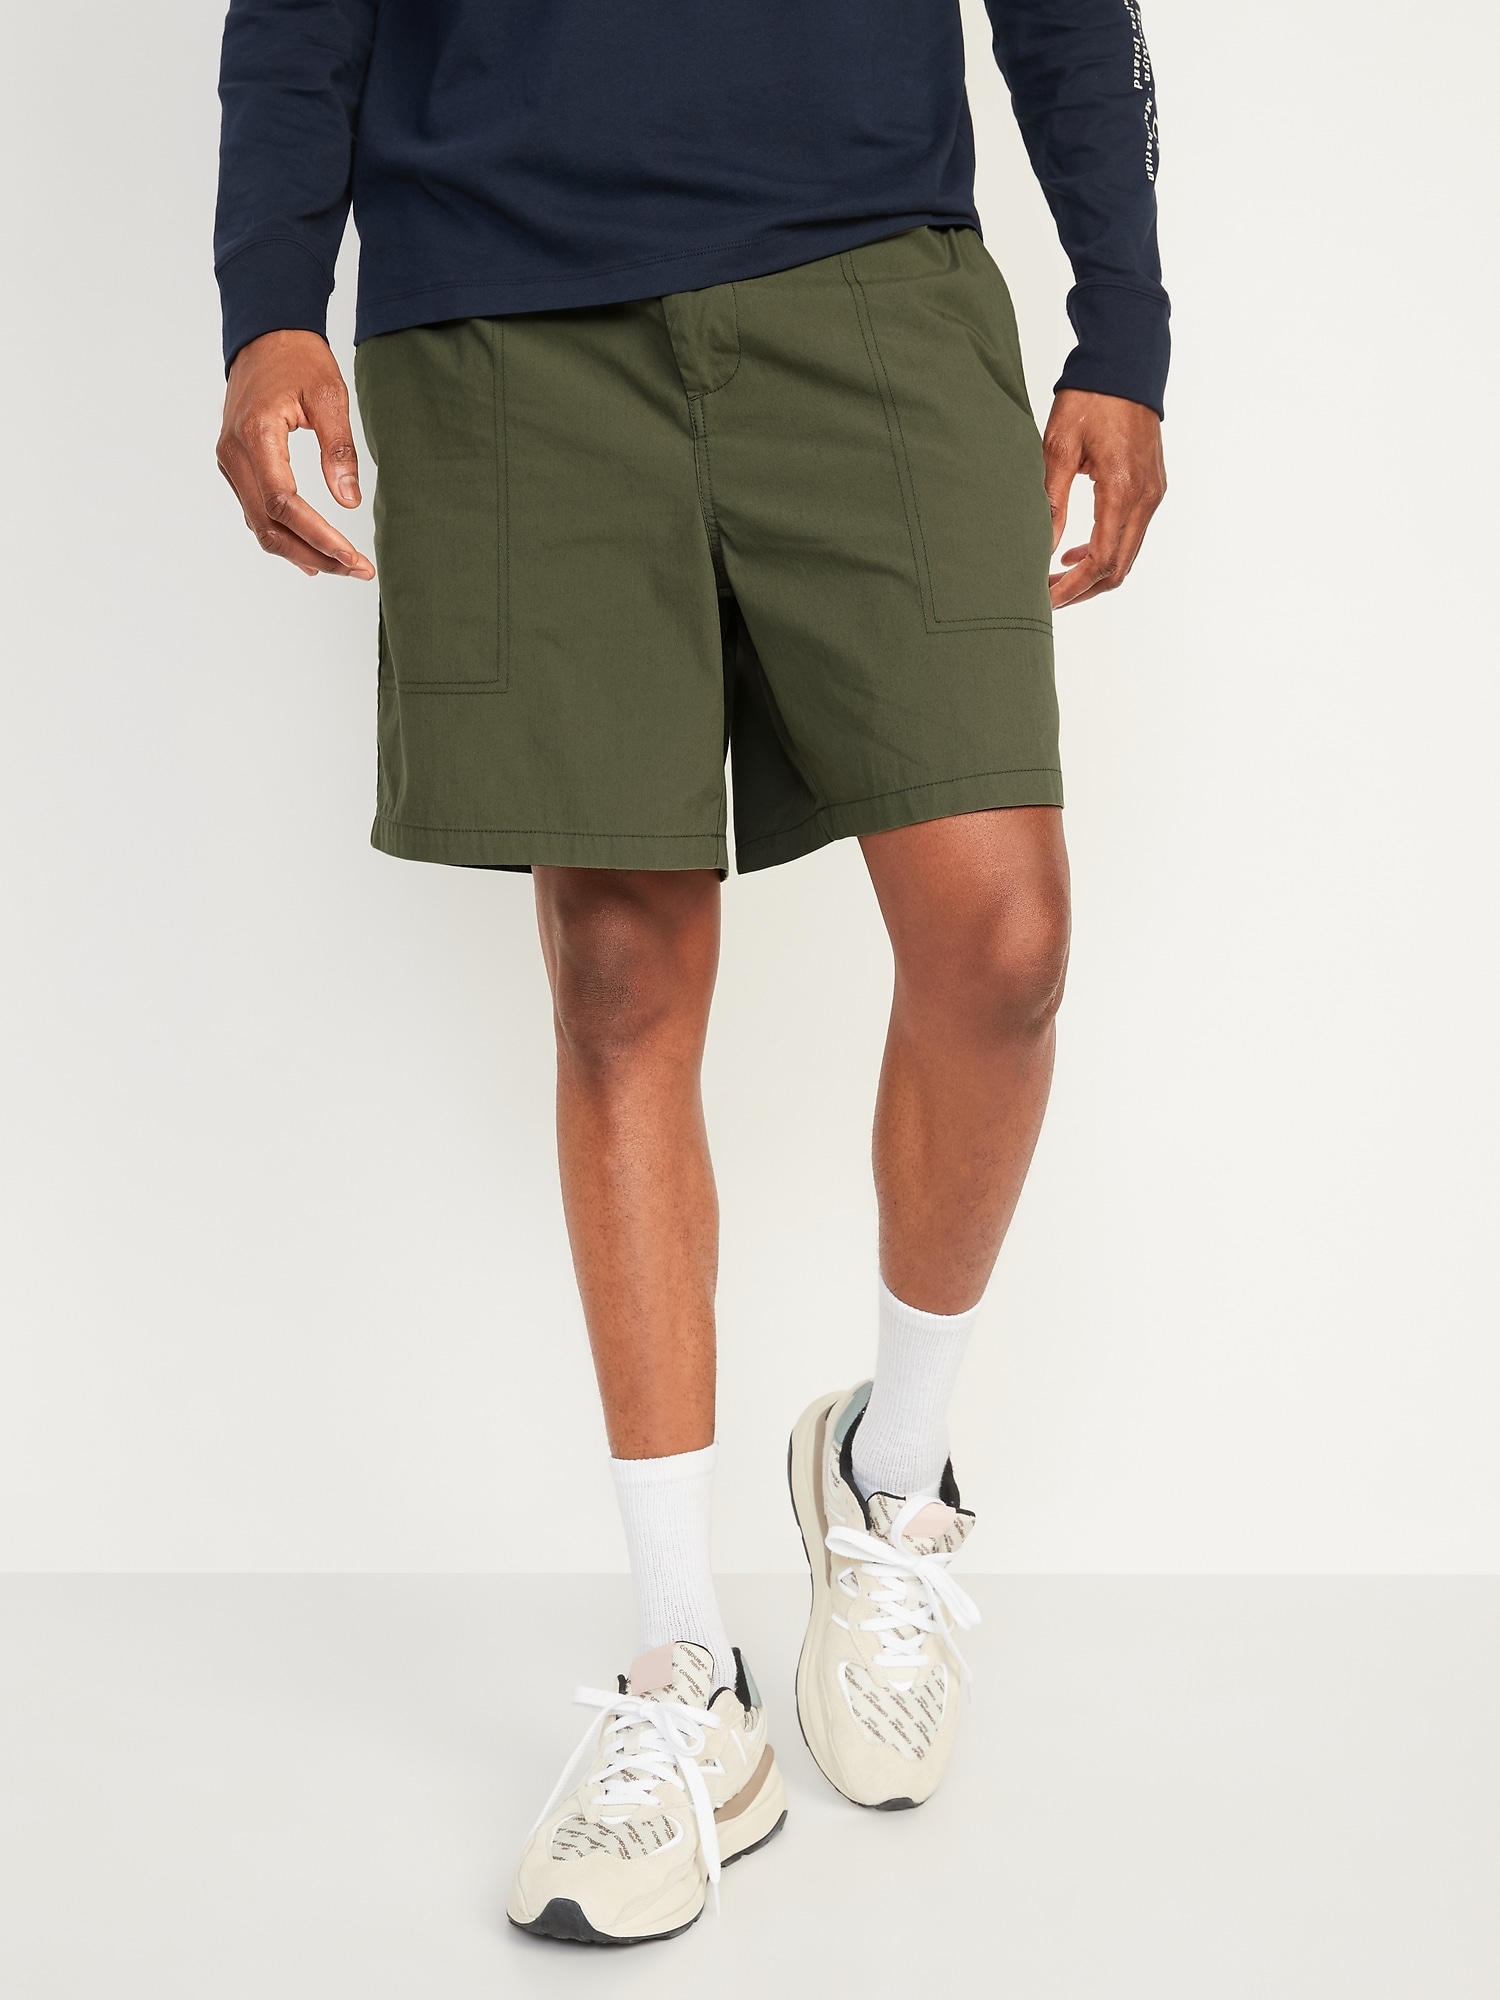 Old Navy Men's 7" Hybrid Tech Chino Shorts (4 colors)